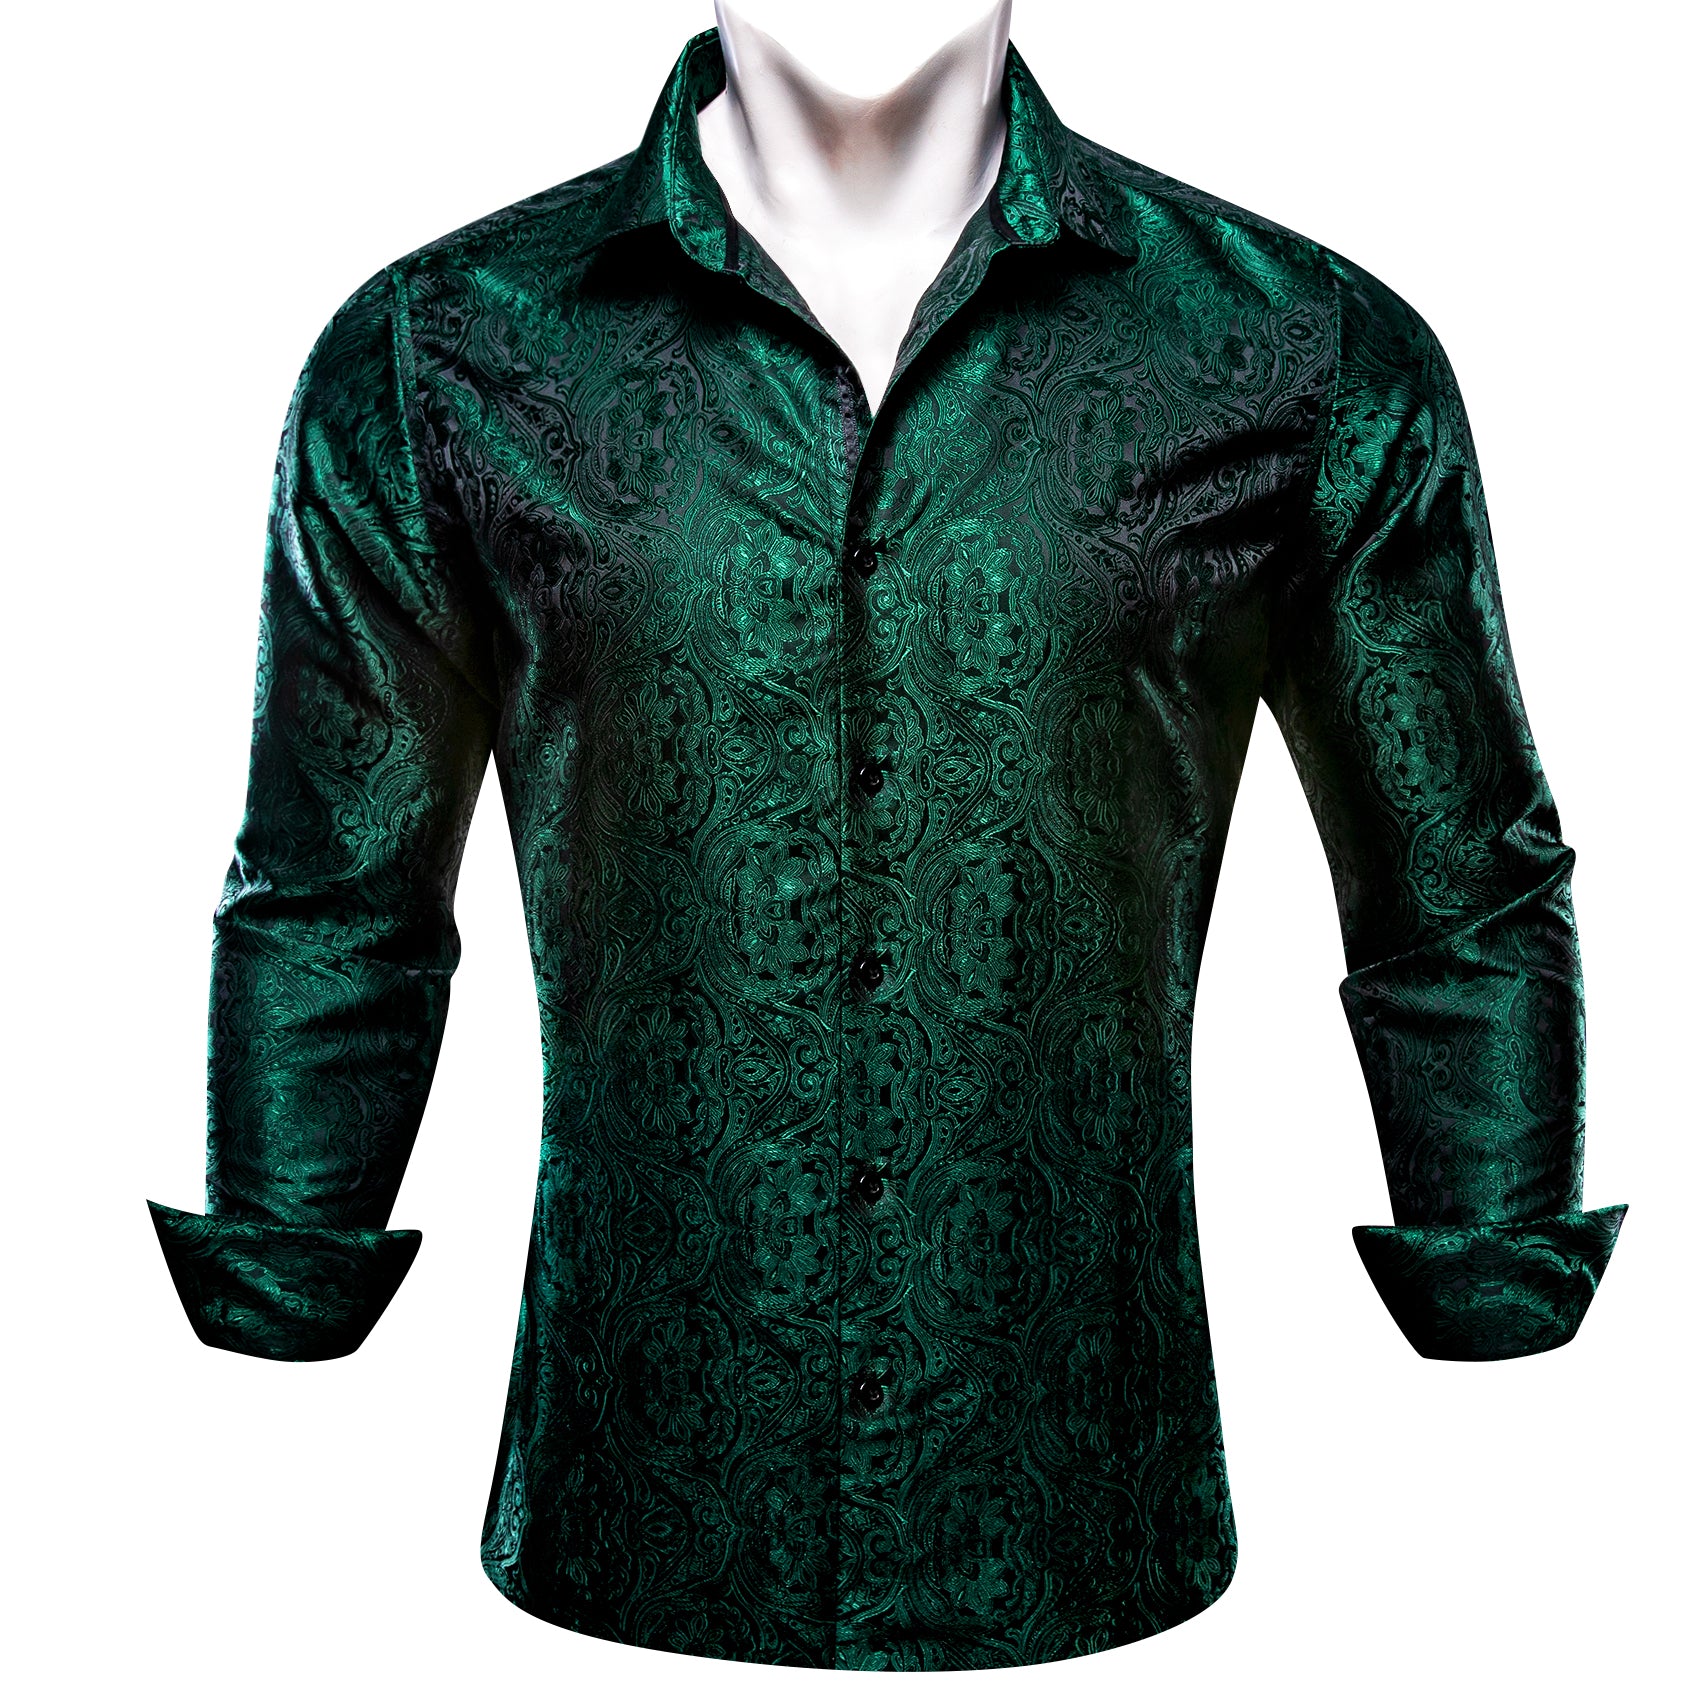 barry wang green shirt paisley jacquard dress shirt 